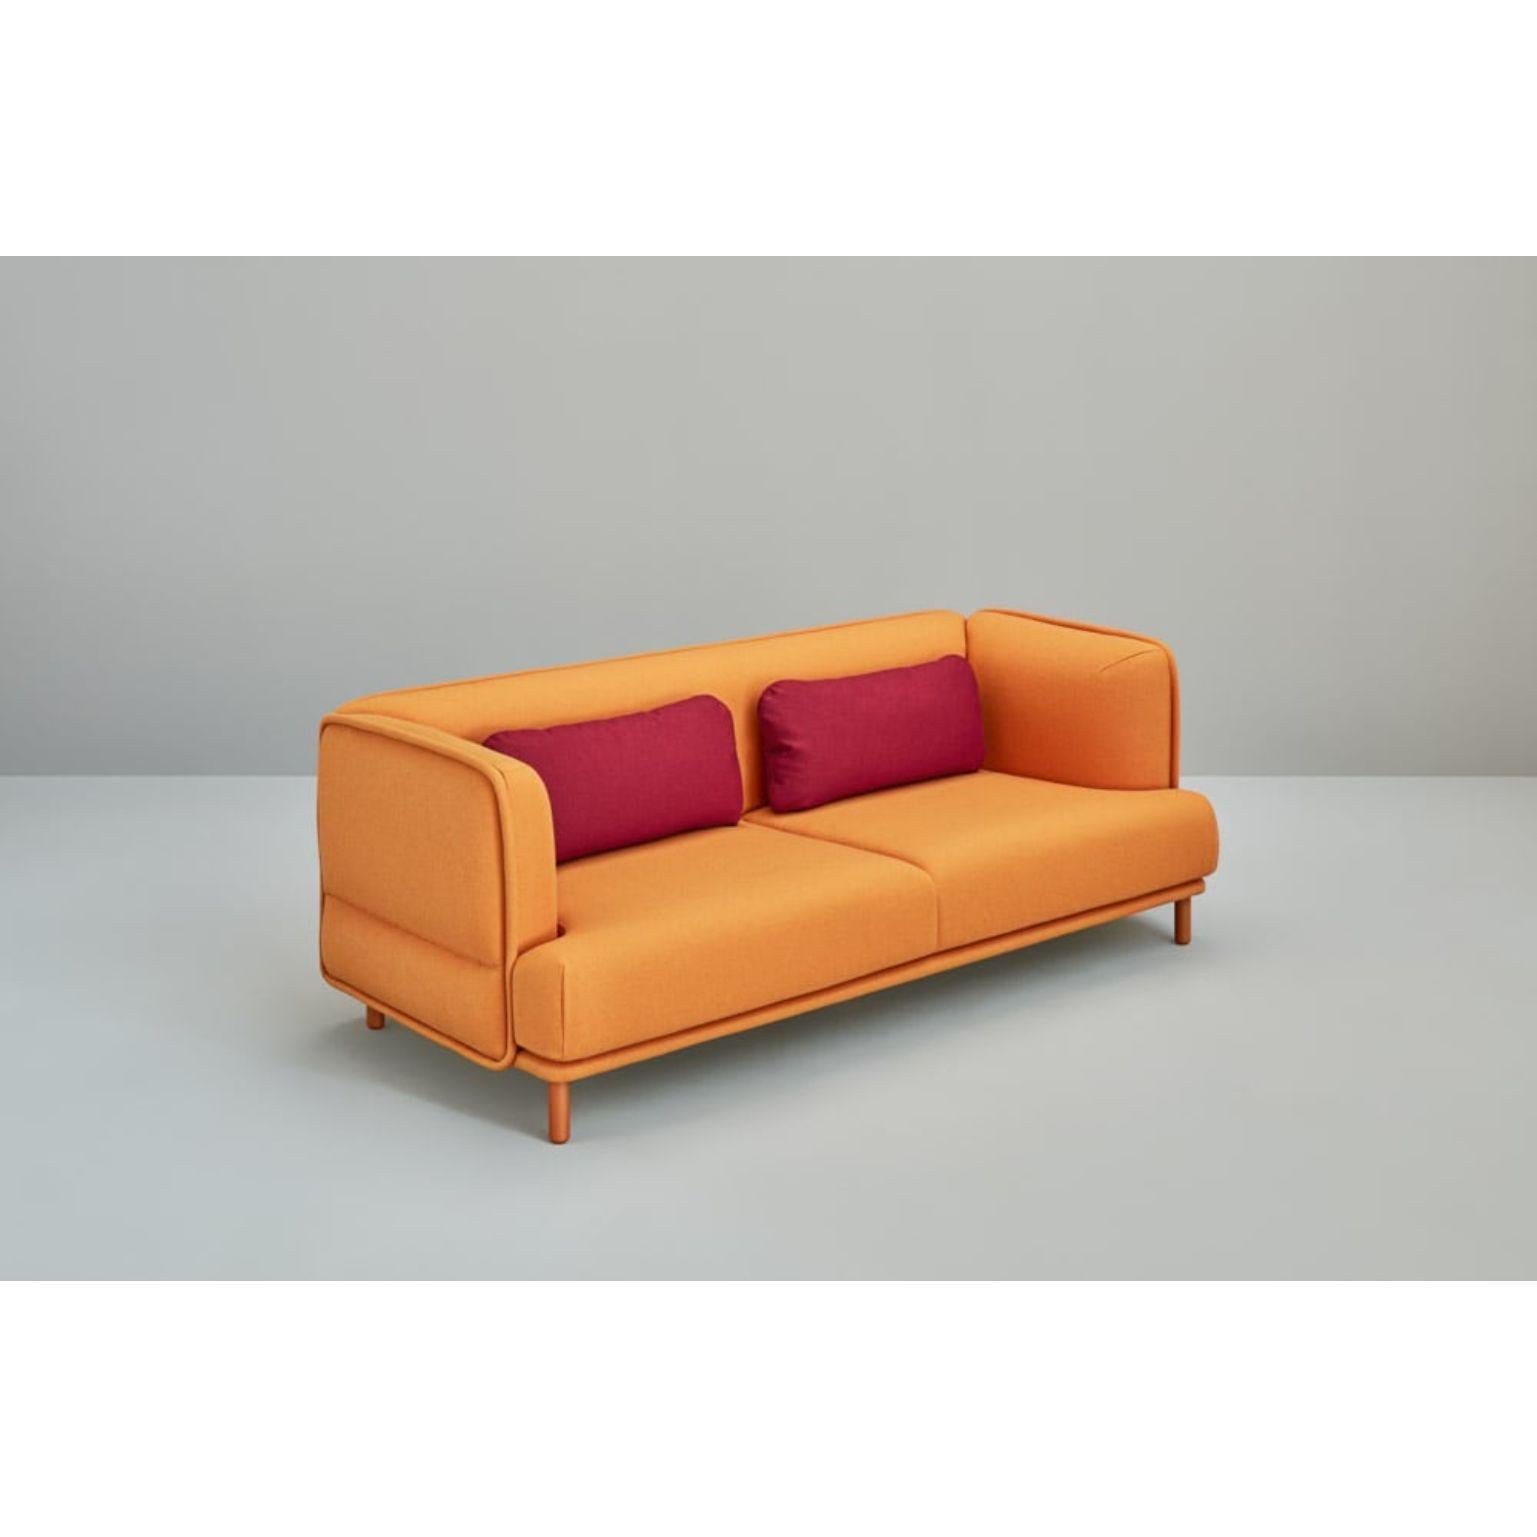 Post-Modern Hug Sofa, Maxi by Cristian Reyes